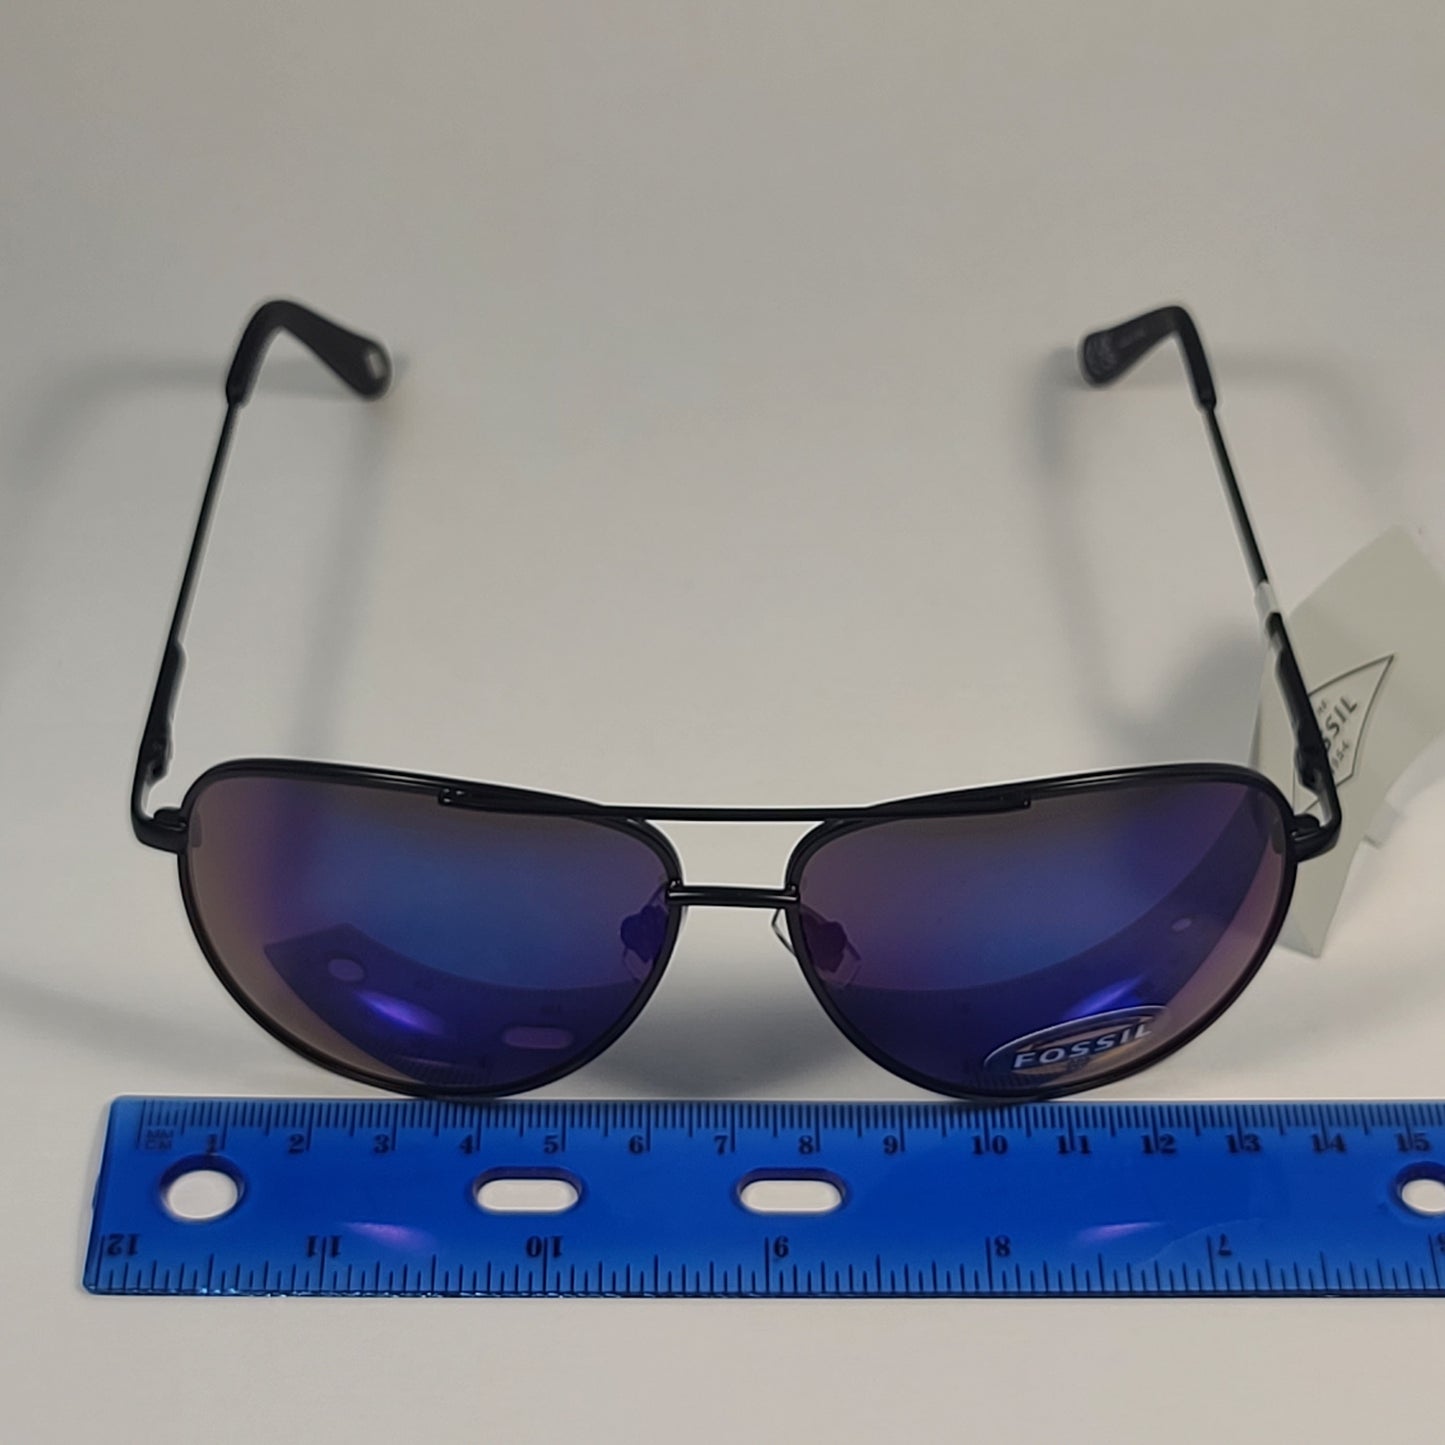 Fossil FM17 Men’s Aviator Sunglasses Matte Black Frame Blue Violet Mirror Lens 59mm - Sunglasses